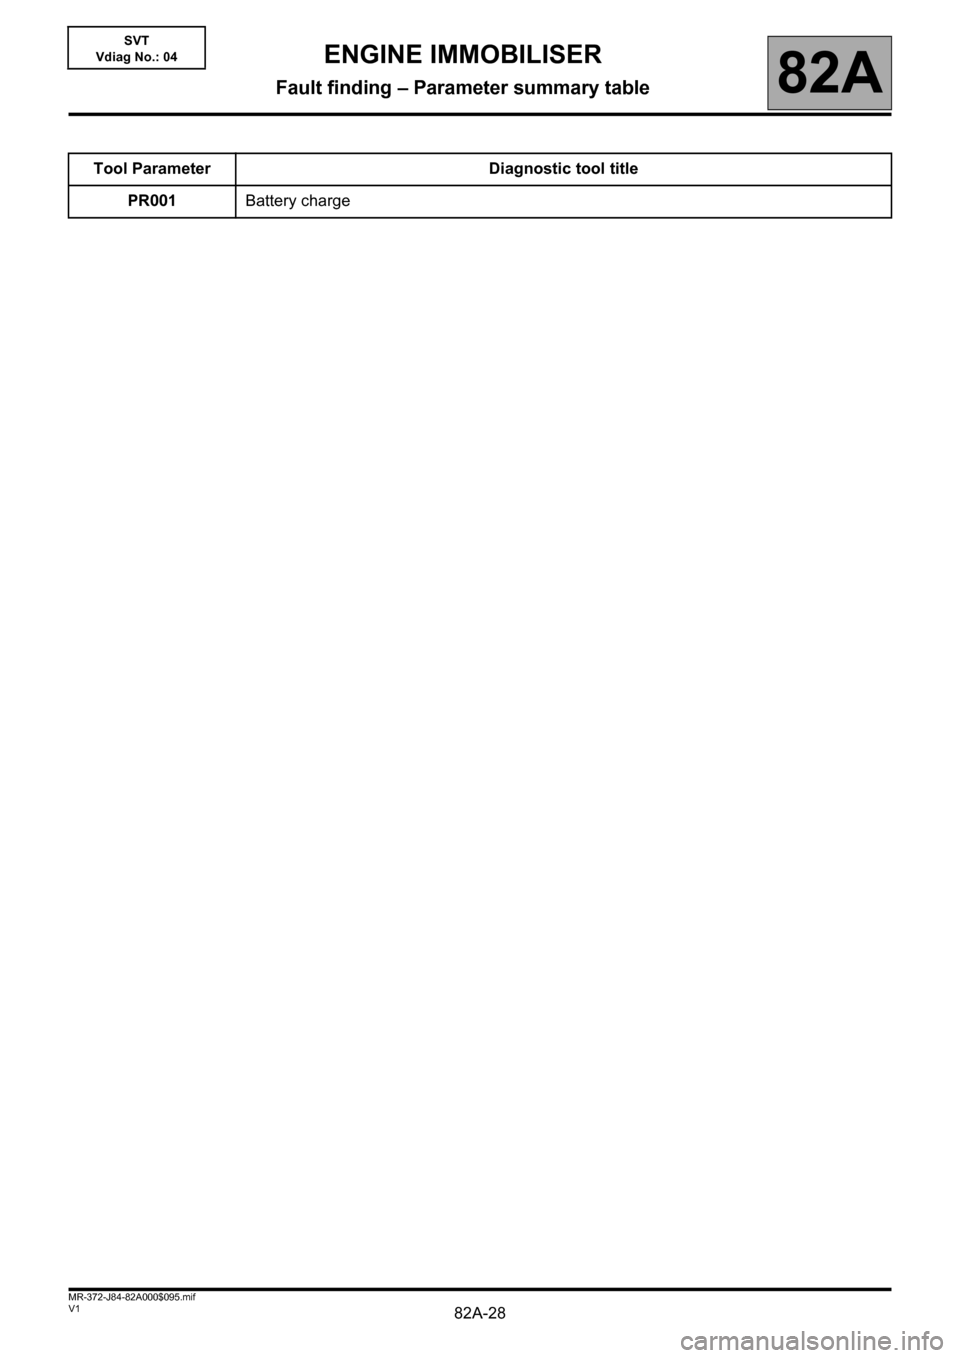 RENAULT SCENIC 2013 J95 / 3.G Electrical Equipment Immobiliser Workshop Manual 82A-28V1 MR-372-J84-82A000$095.mif
82A
SVT
Vdiag No.: 04
Tool Parameter Diagnostic tool title
PR001Battery charge
ENGINE IMMOBILISER
Fault finding – Parameter summary table 